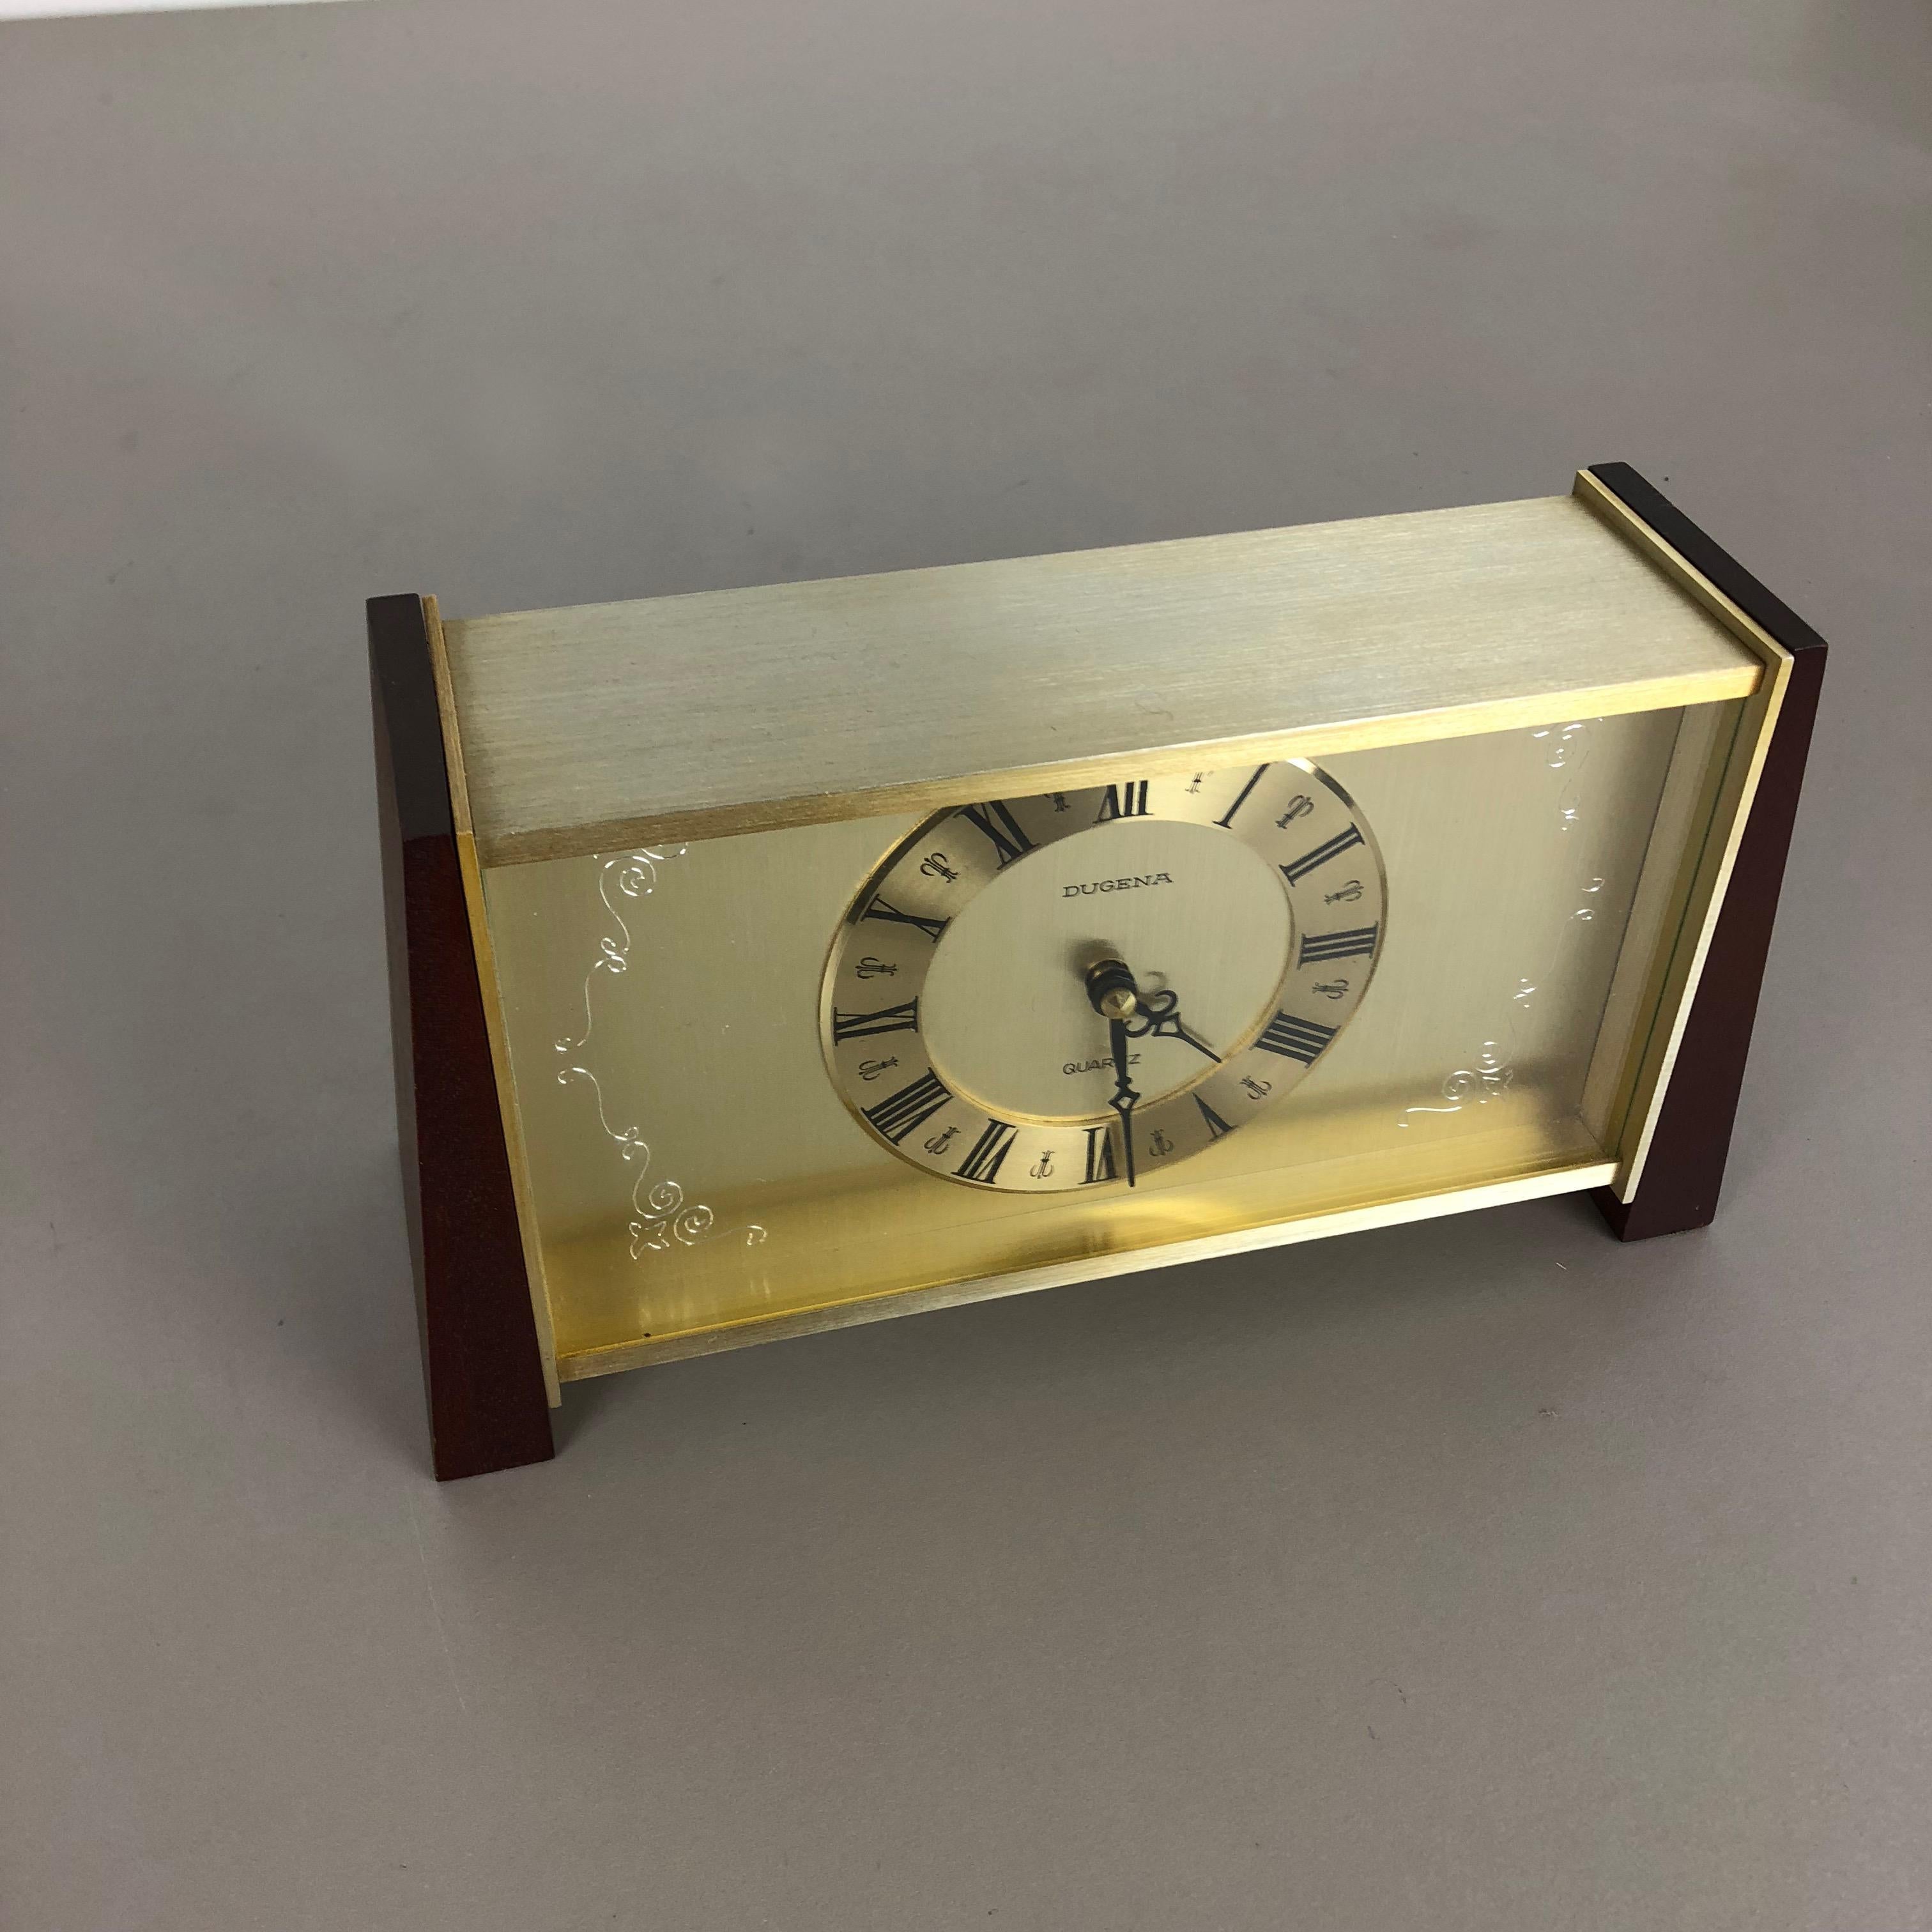 1960s mantel clock